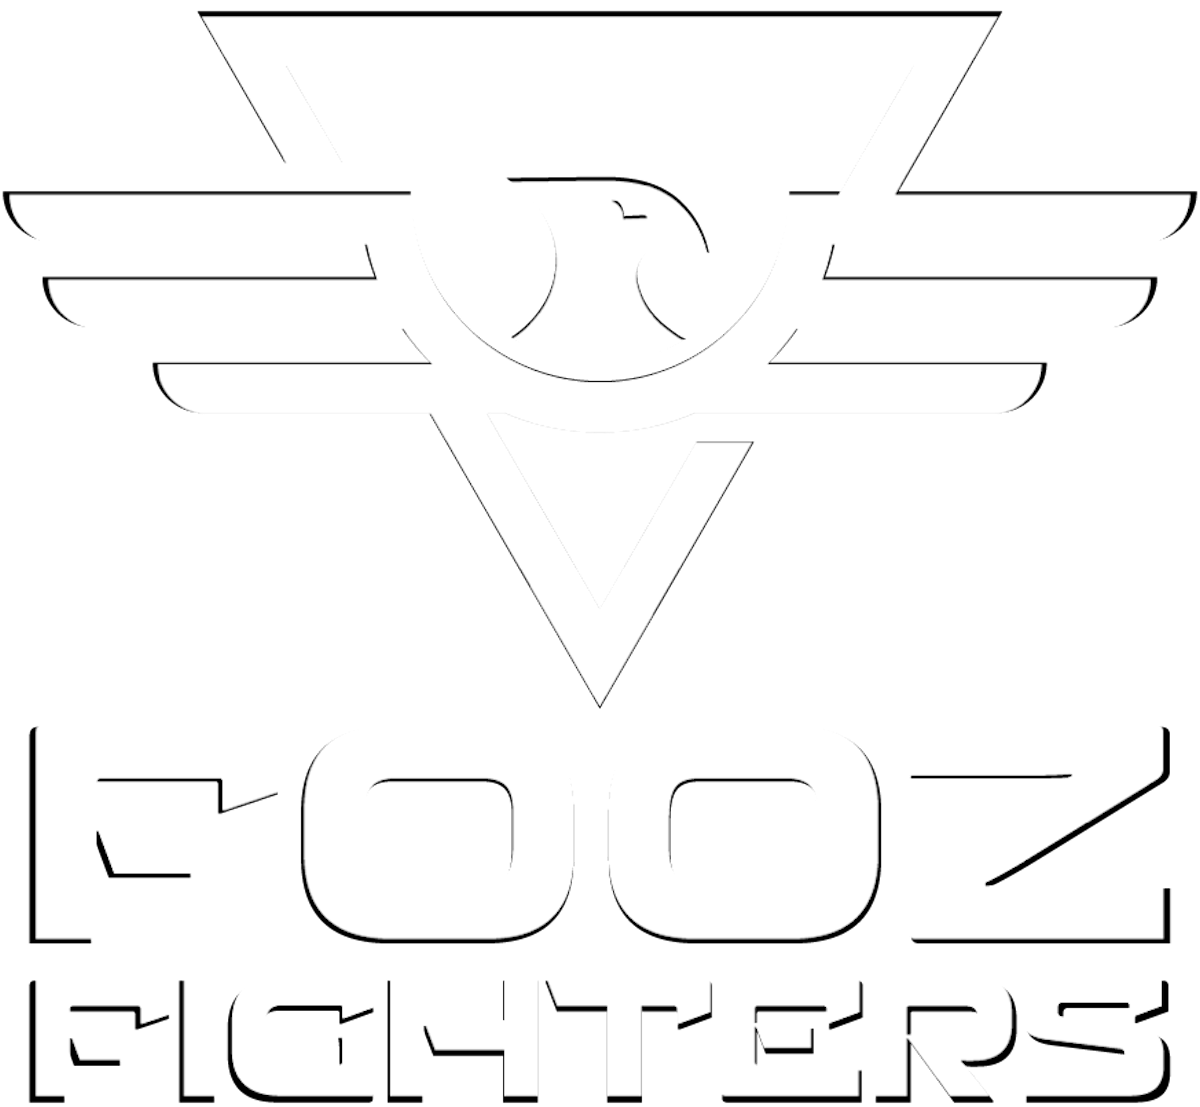 Fooz Fighters